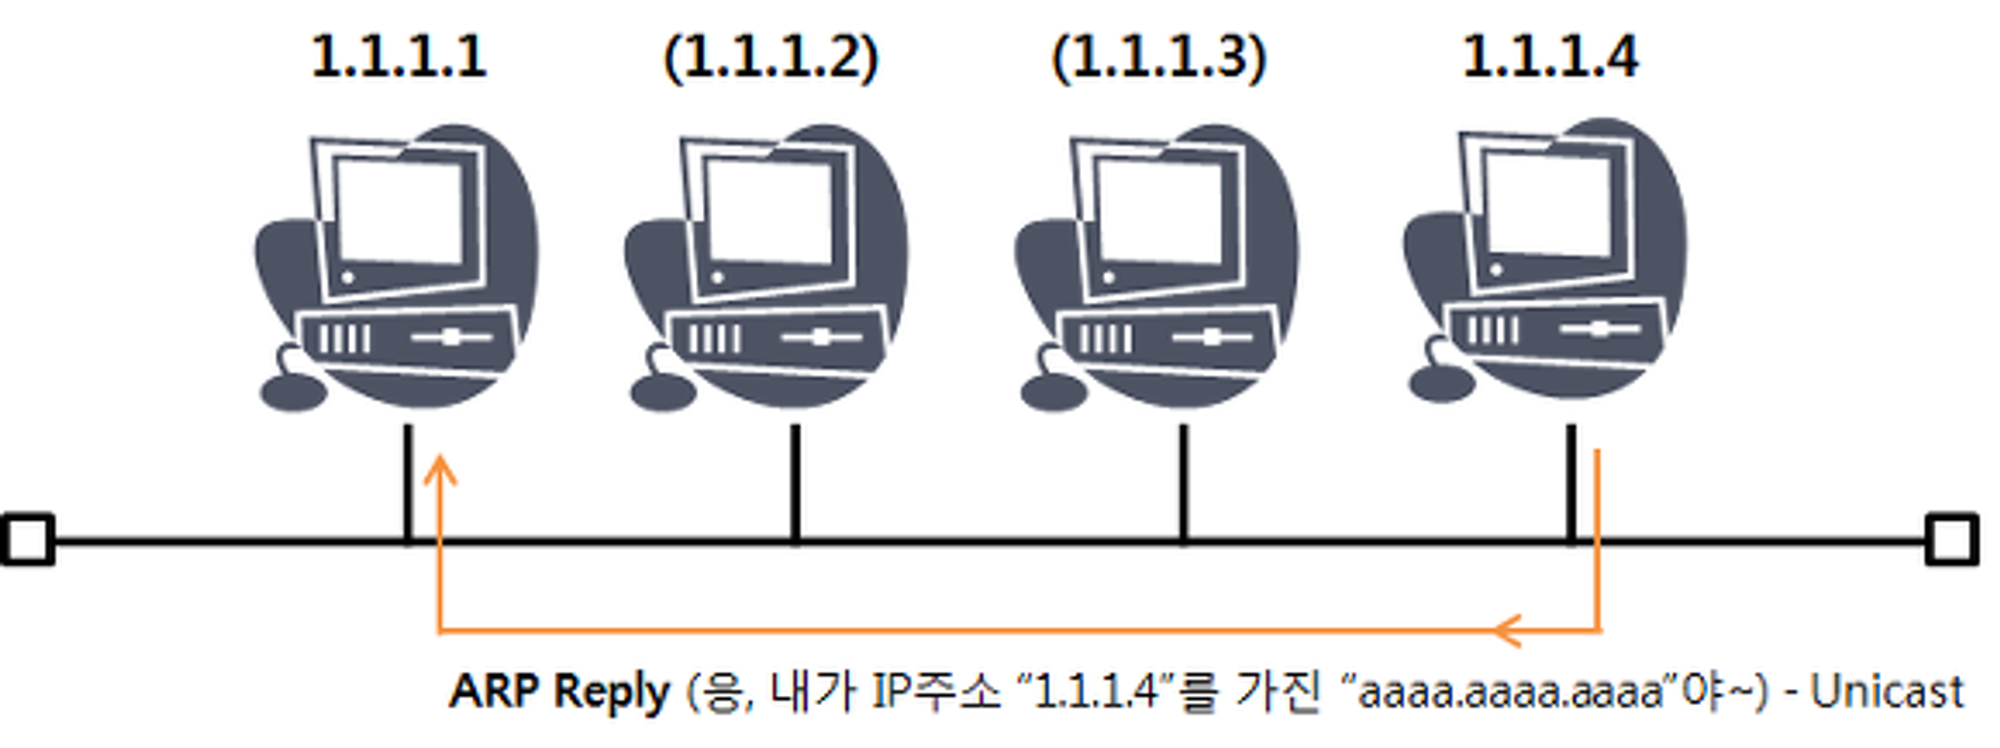 [TCP/IP] 7. TCP/IP의 기능(1): ICMP, ARP, DNS